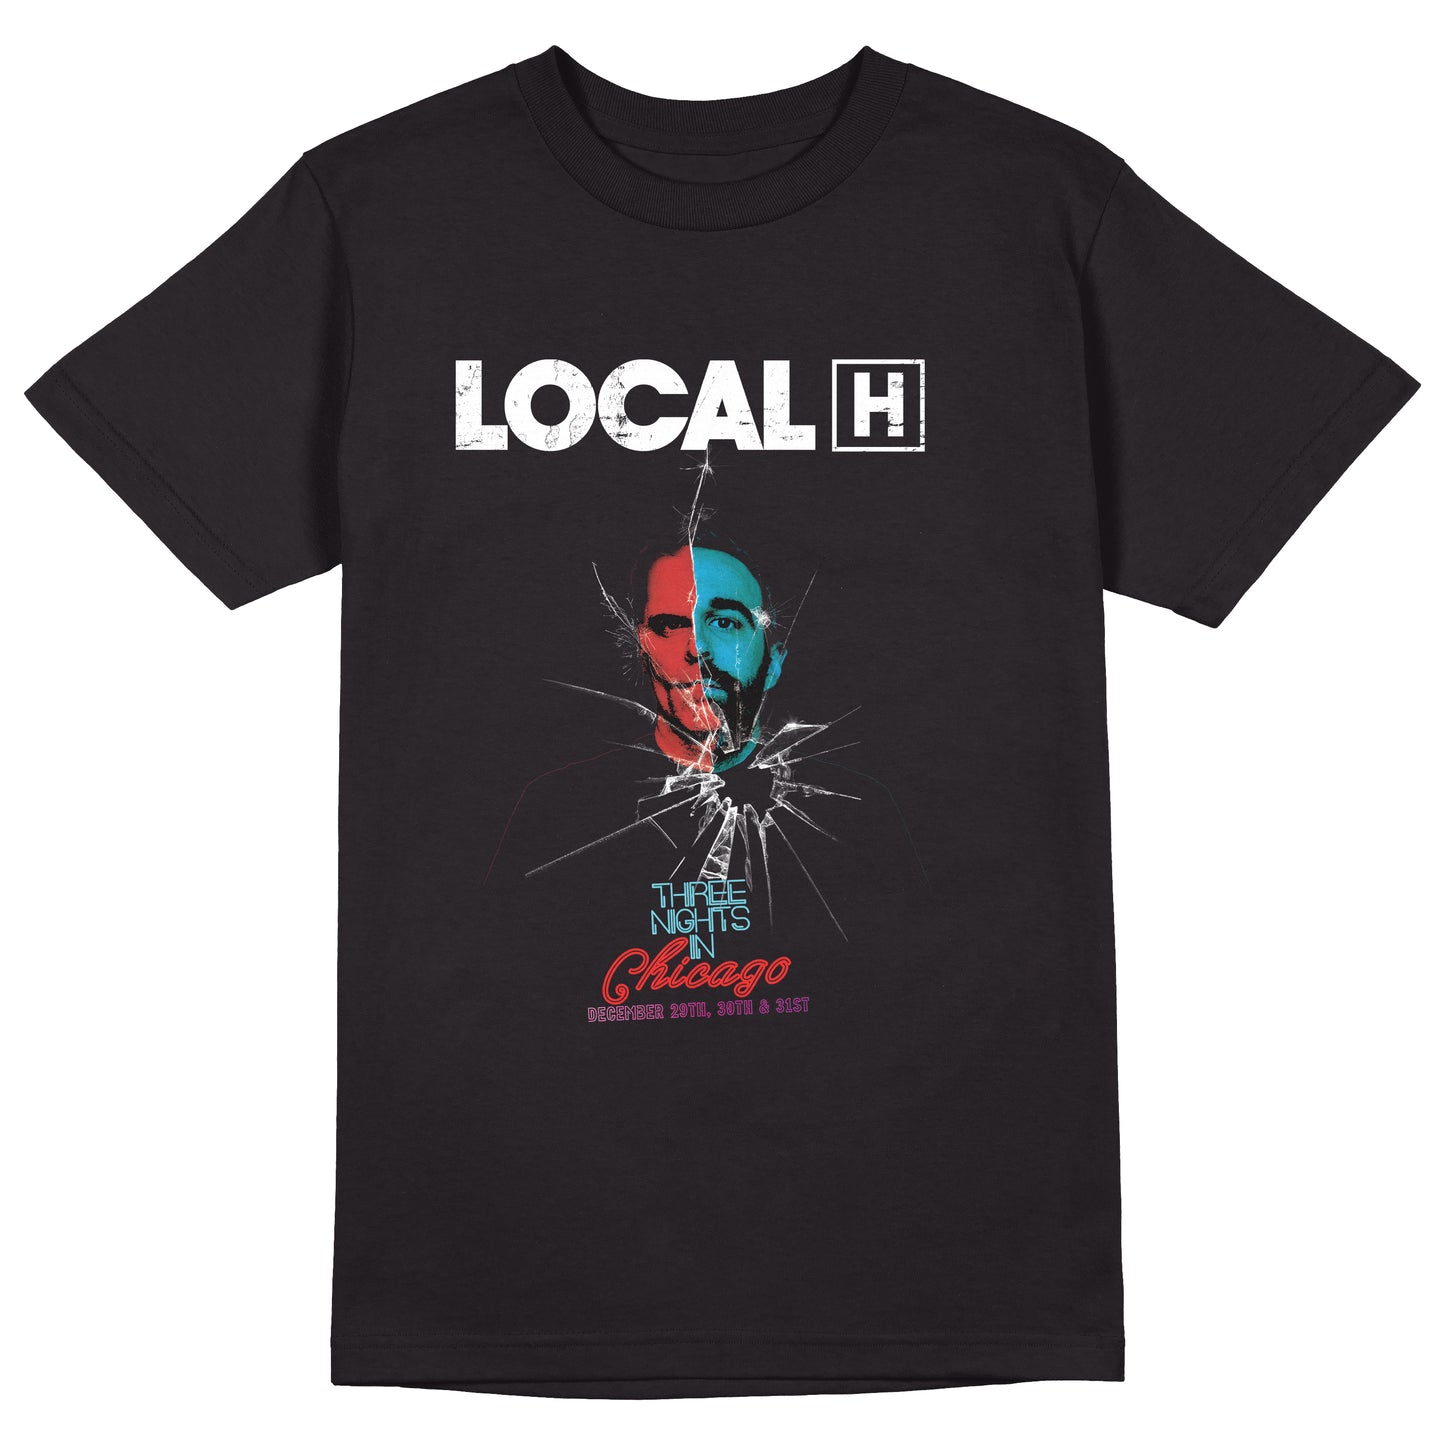 Local H - Beat Kitchen NYE Tee shirt